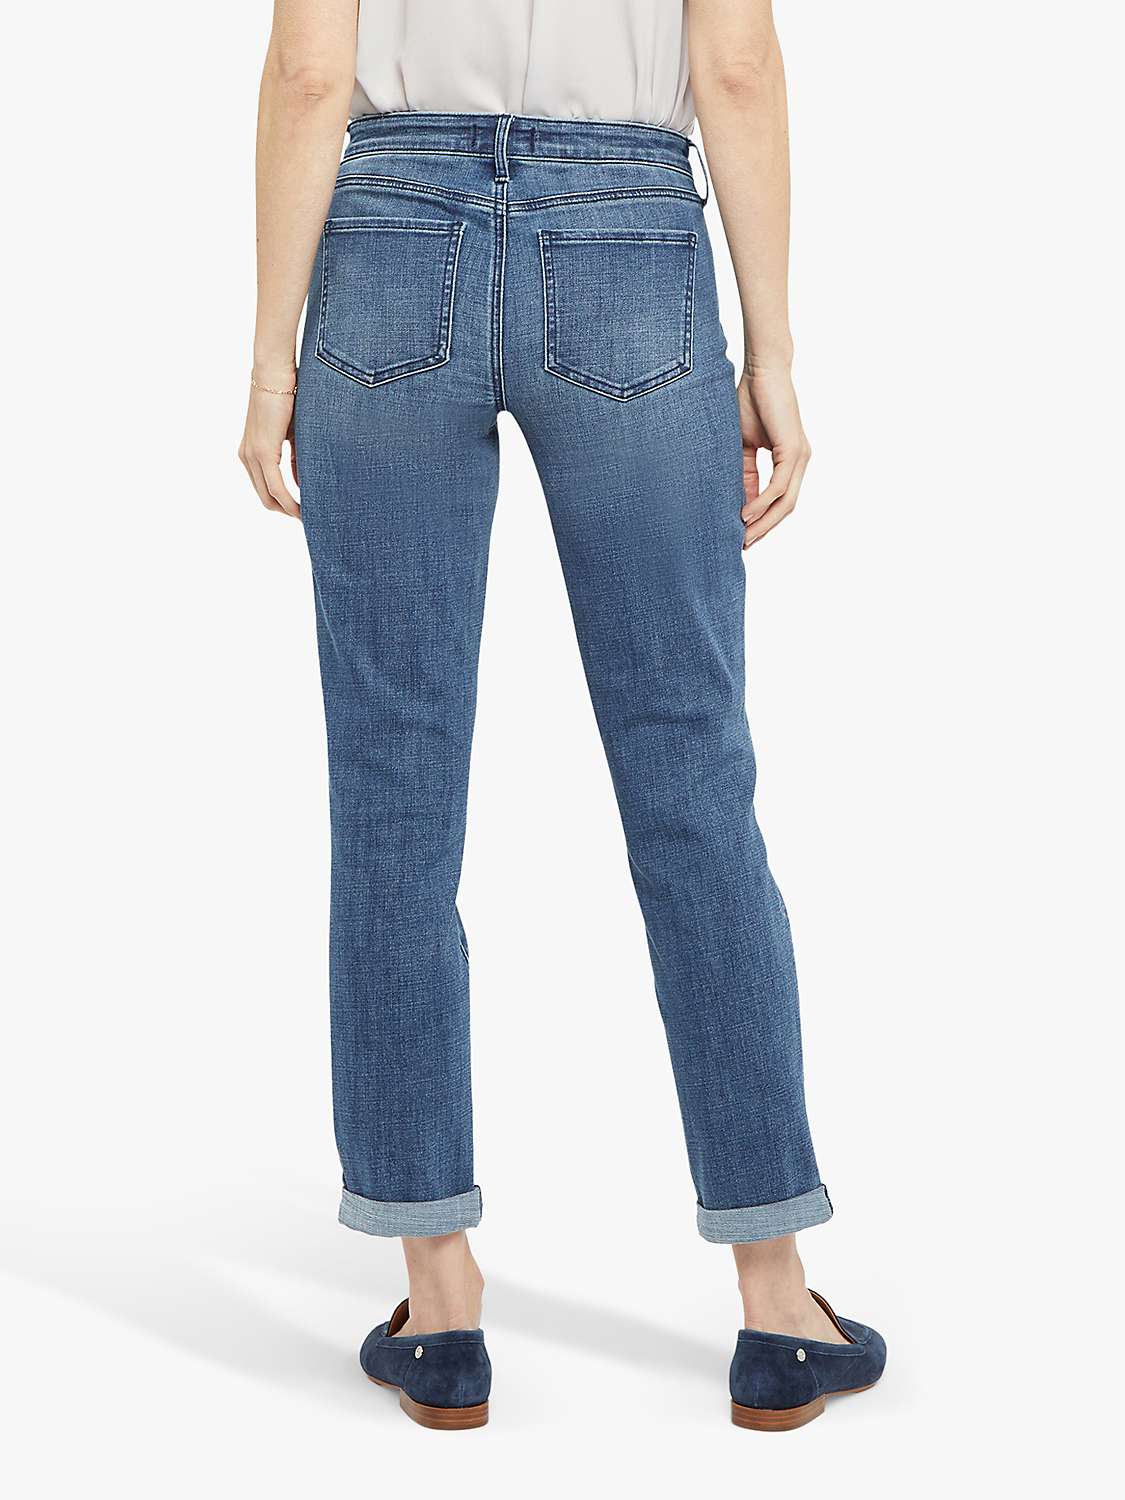 Buy NYDJ Margot Girlfriend Roll Cuff Jeans Online at johnlewis.com